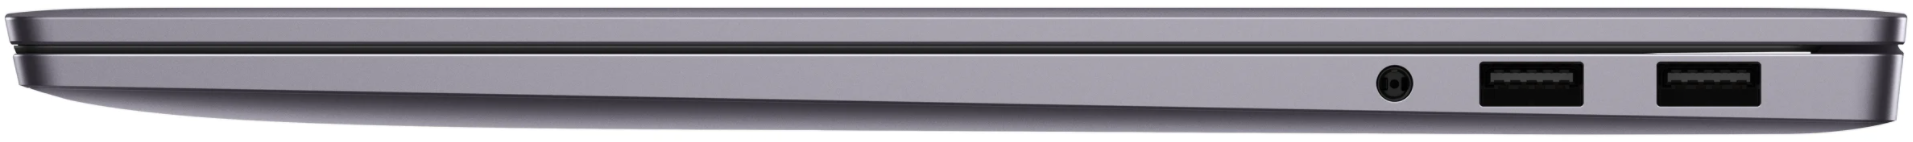 Ноутбук HUAWEI MateBook D16 (Ryzen 5 4600H/8GB/512GB SSD/Radeon Vega 8/Win10) 53011SJJ, серый